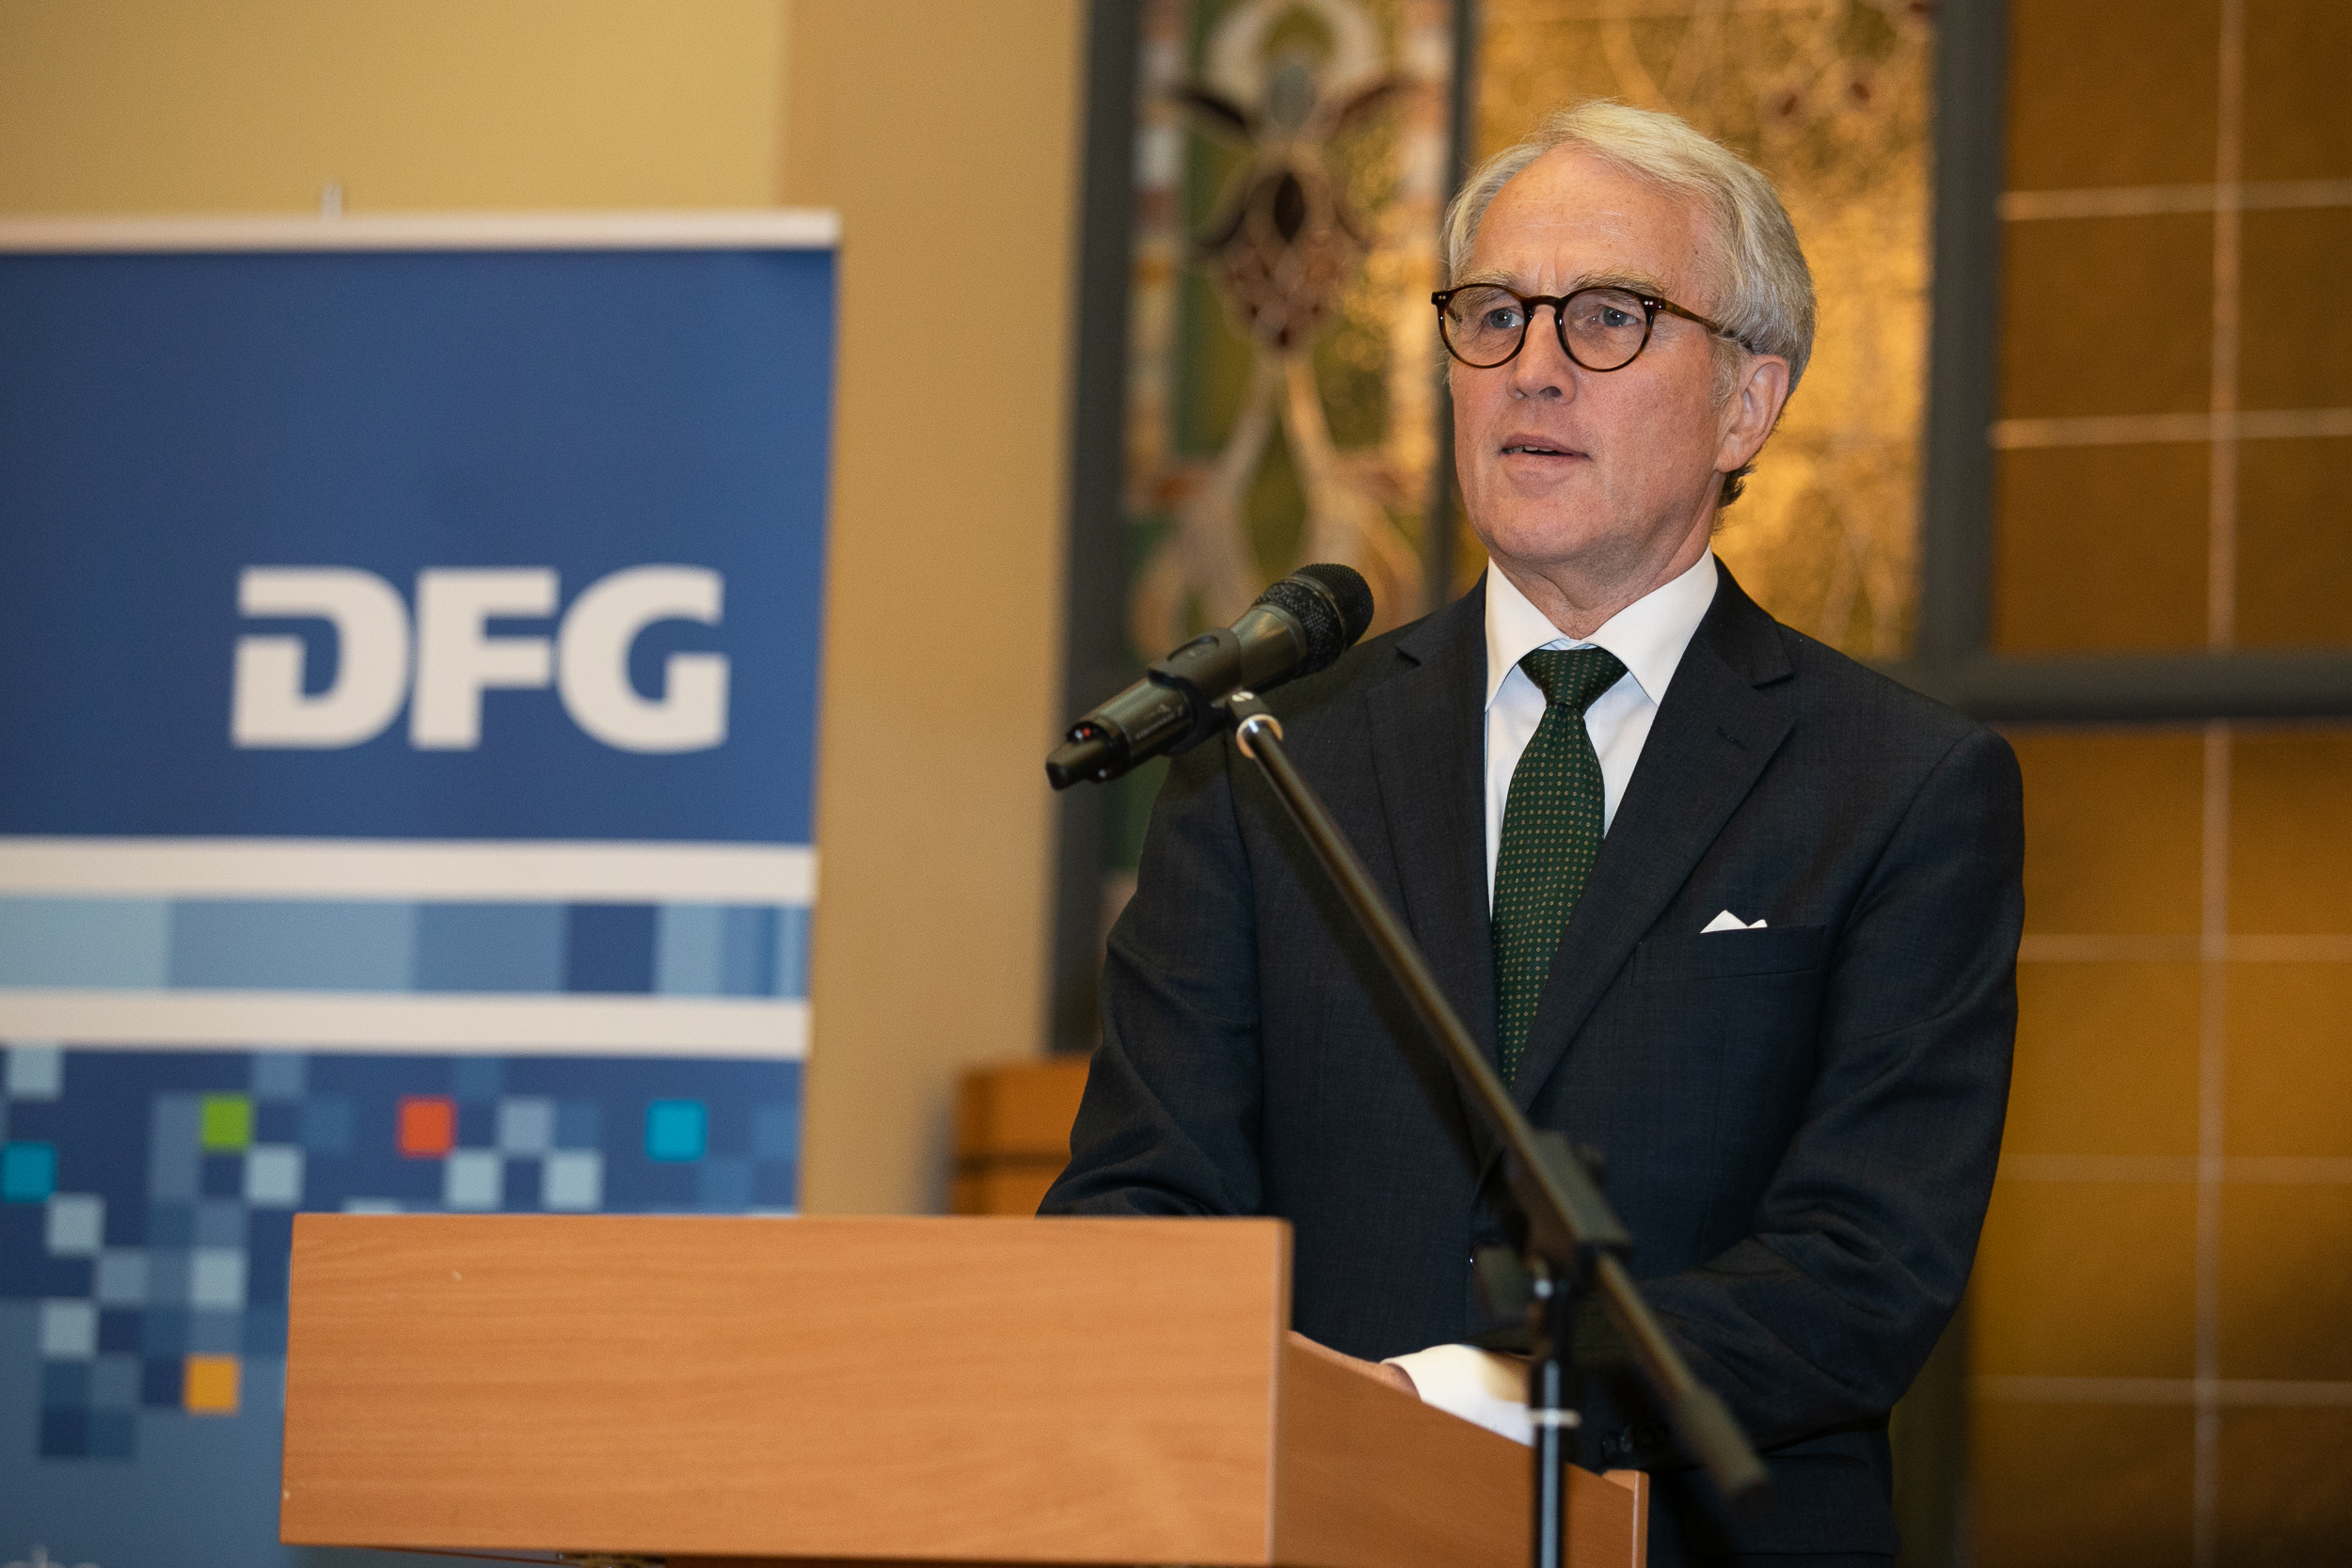 Ambassador Rüdiger von Fritsch welcomes attendees at the 2019 DFG summer reception